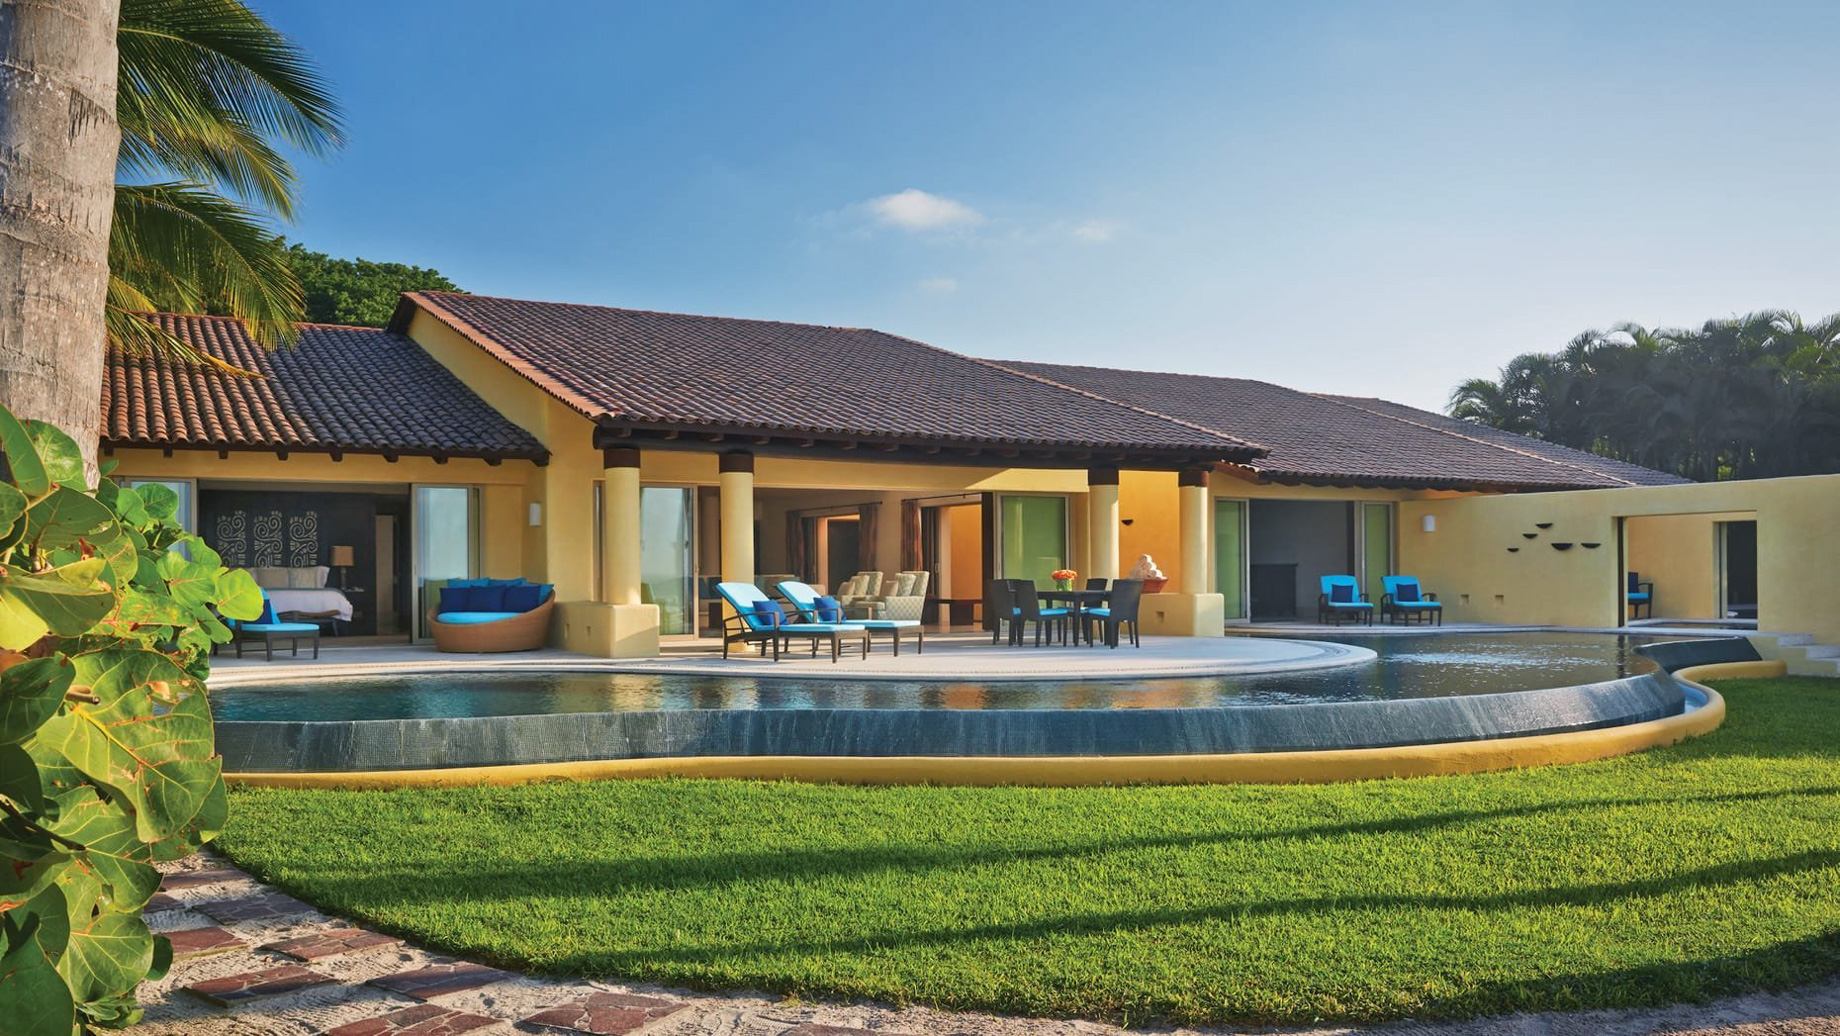 Four Seasons Resort Punta Mita – Nayarit, Mexico – Coral Beach House